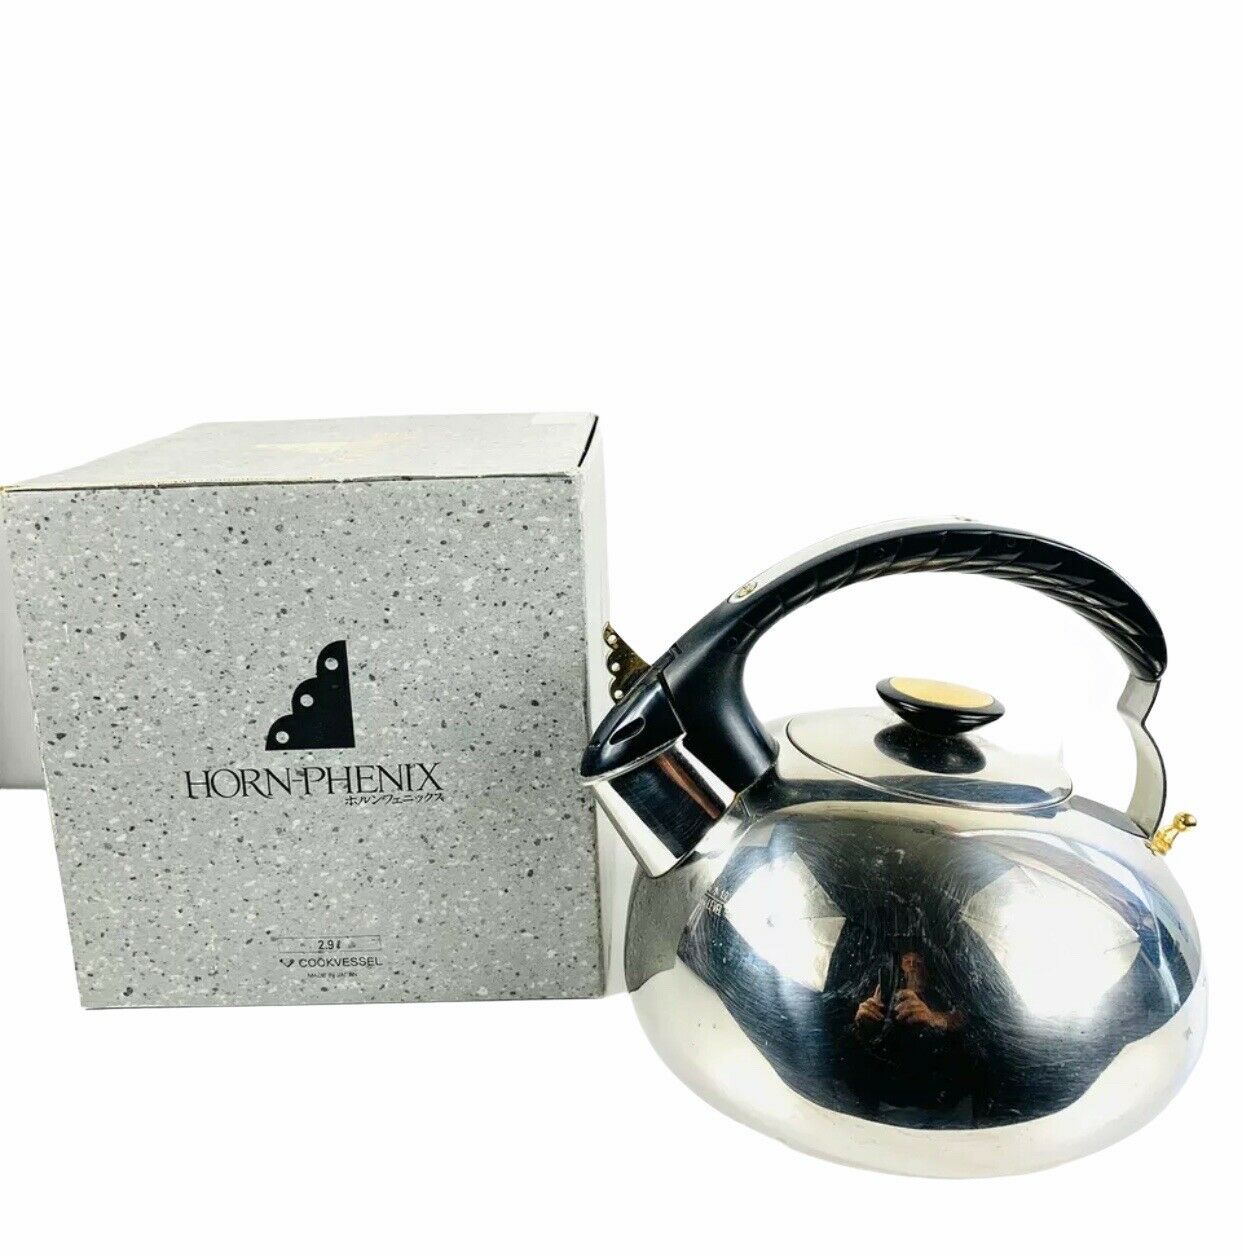 Vintage Japanese Horn-phenix Stainless Tea Kettle Cook Vessel Original Box 2.5l